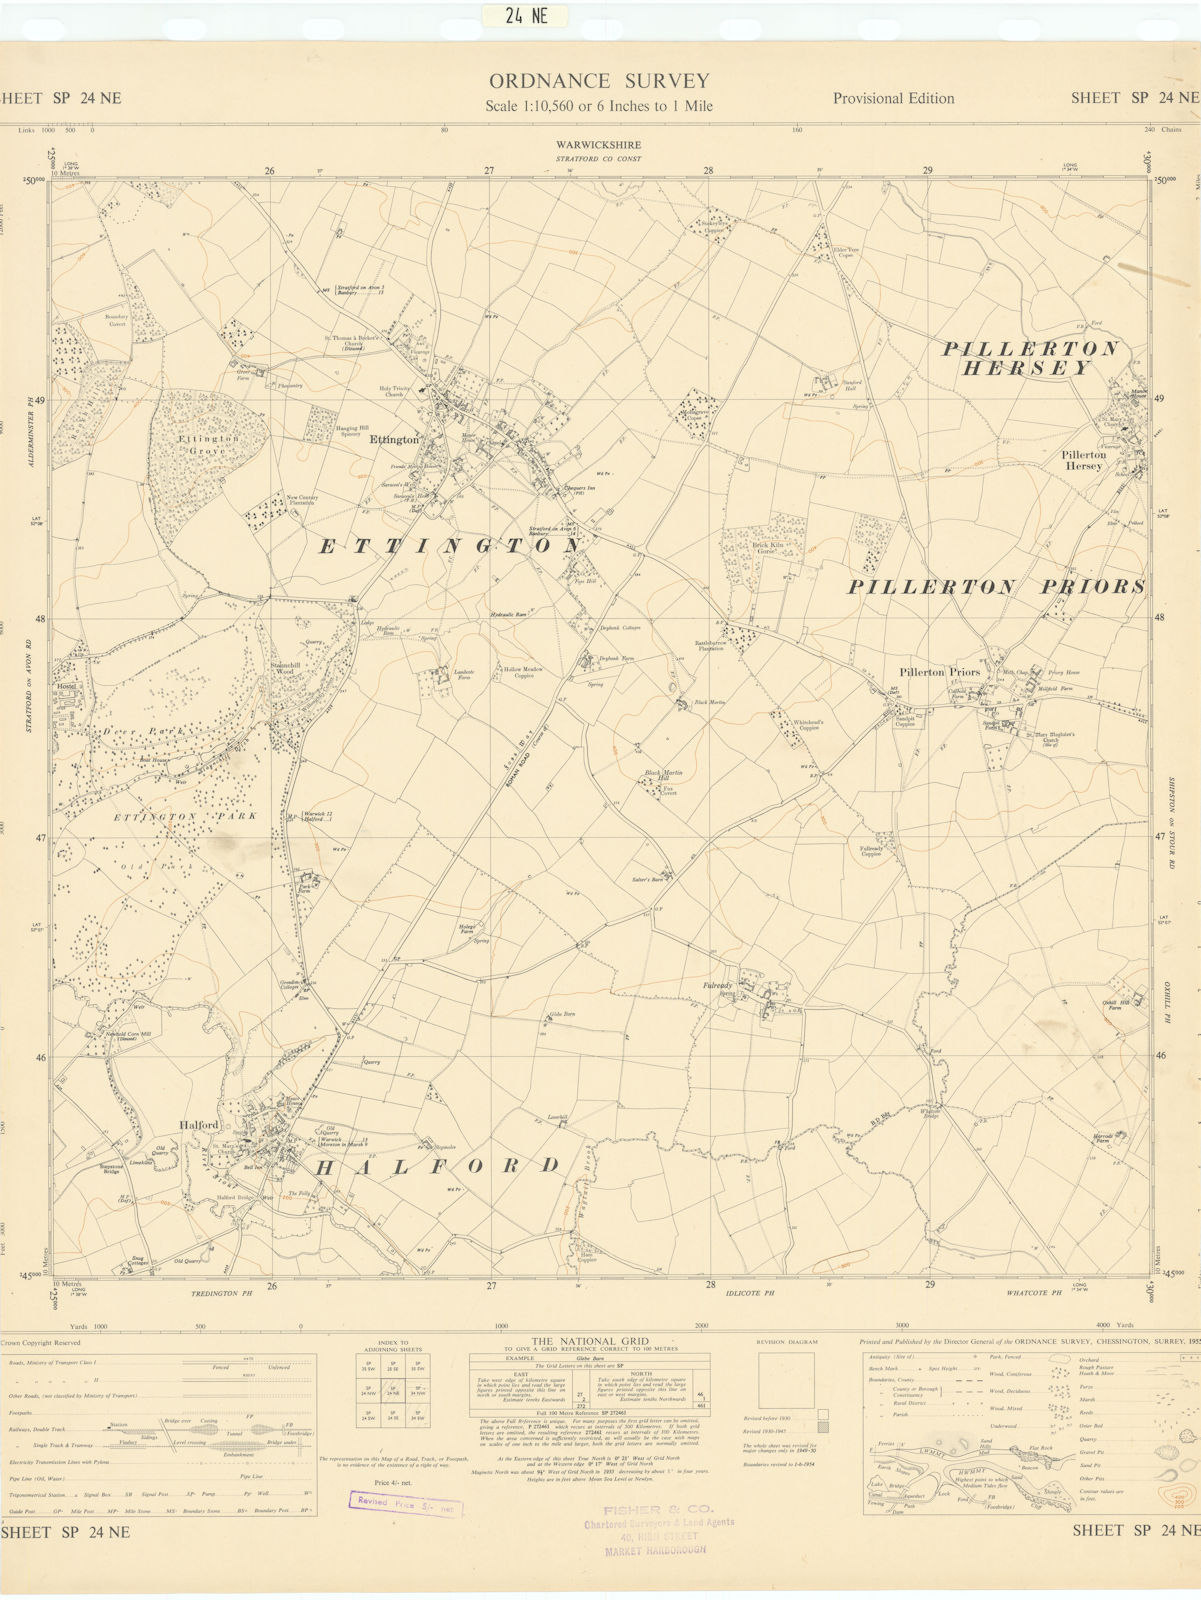 Ordnance Survey SP24NE Warks Halford Ettington Pillerton Hersey/Priors 1955 map